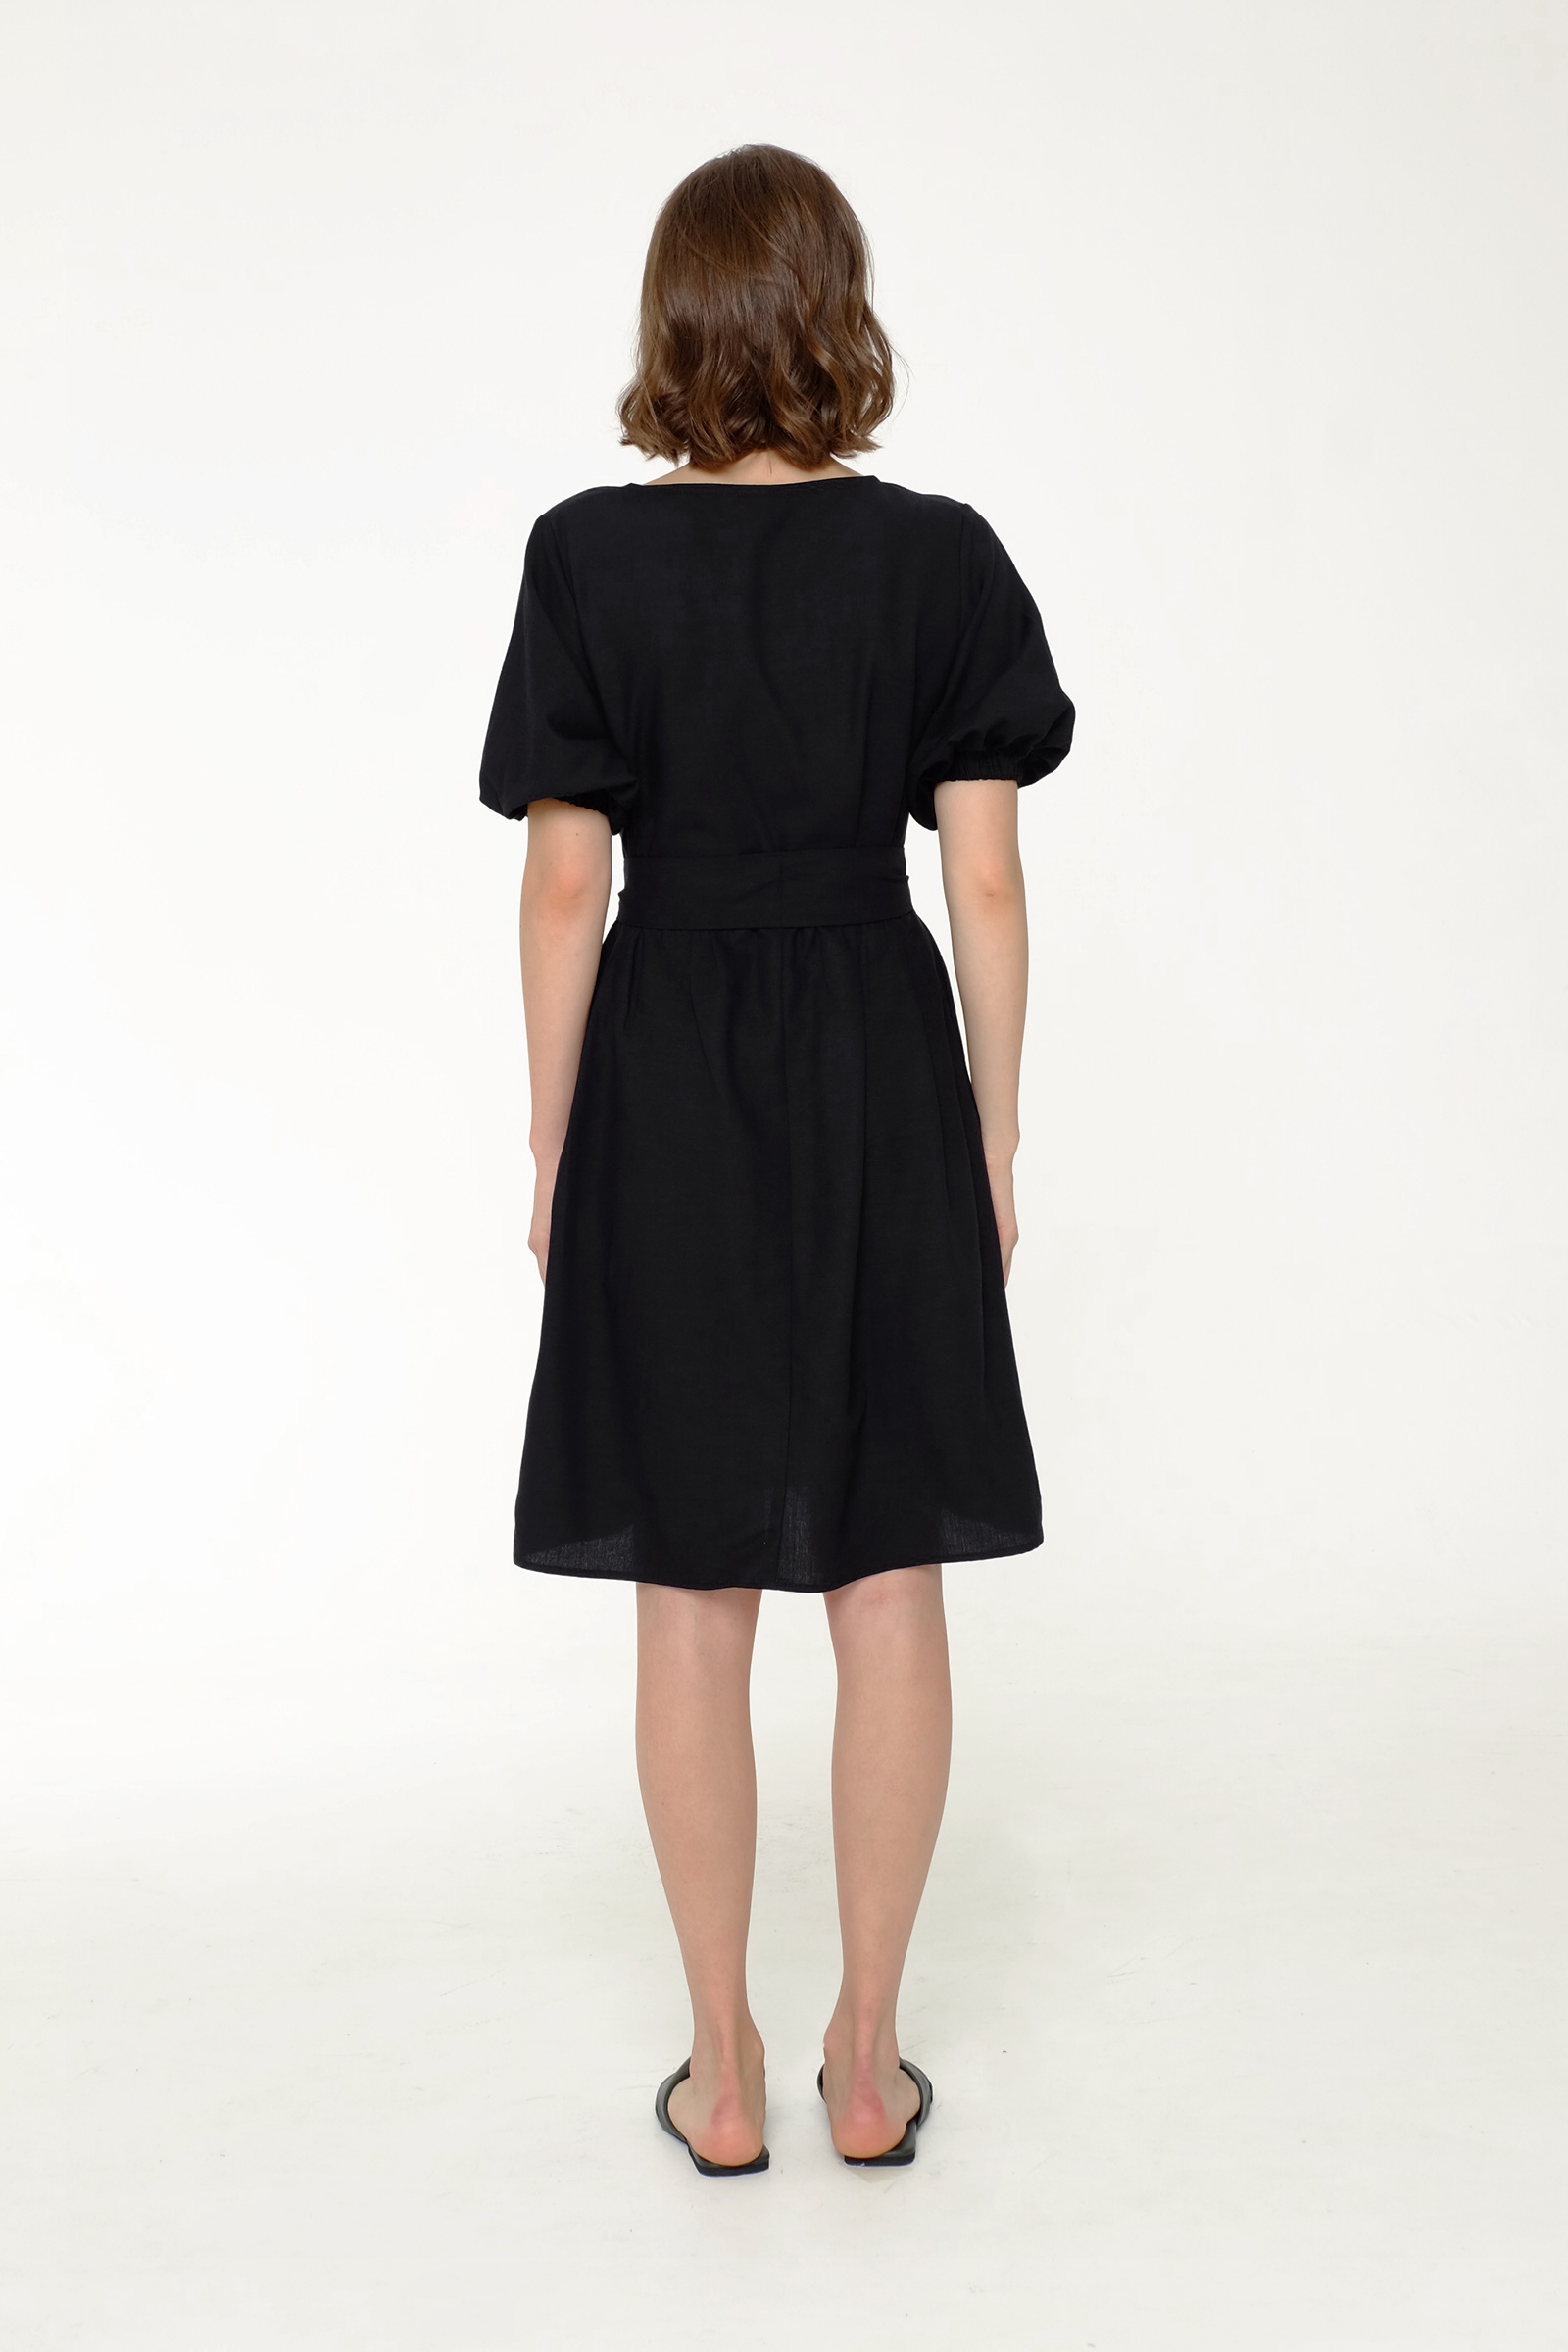 Picture of HEBREW DRESS BLACK